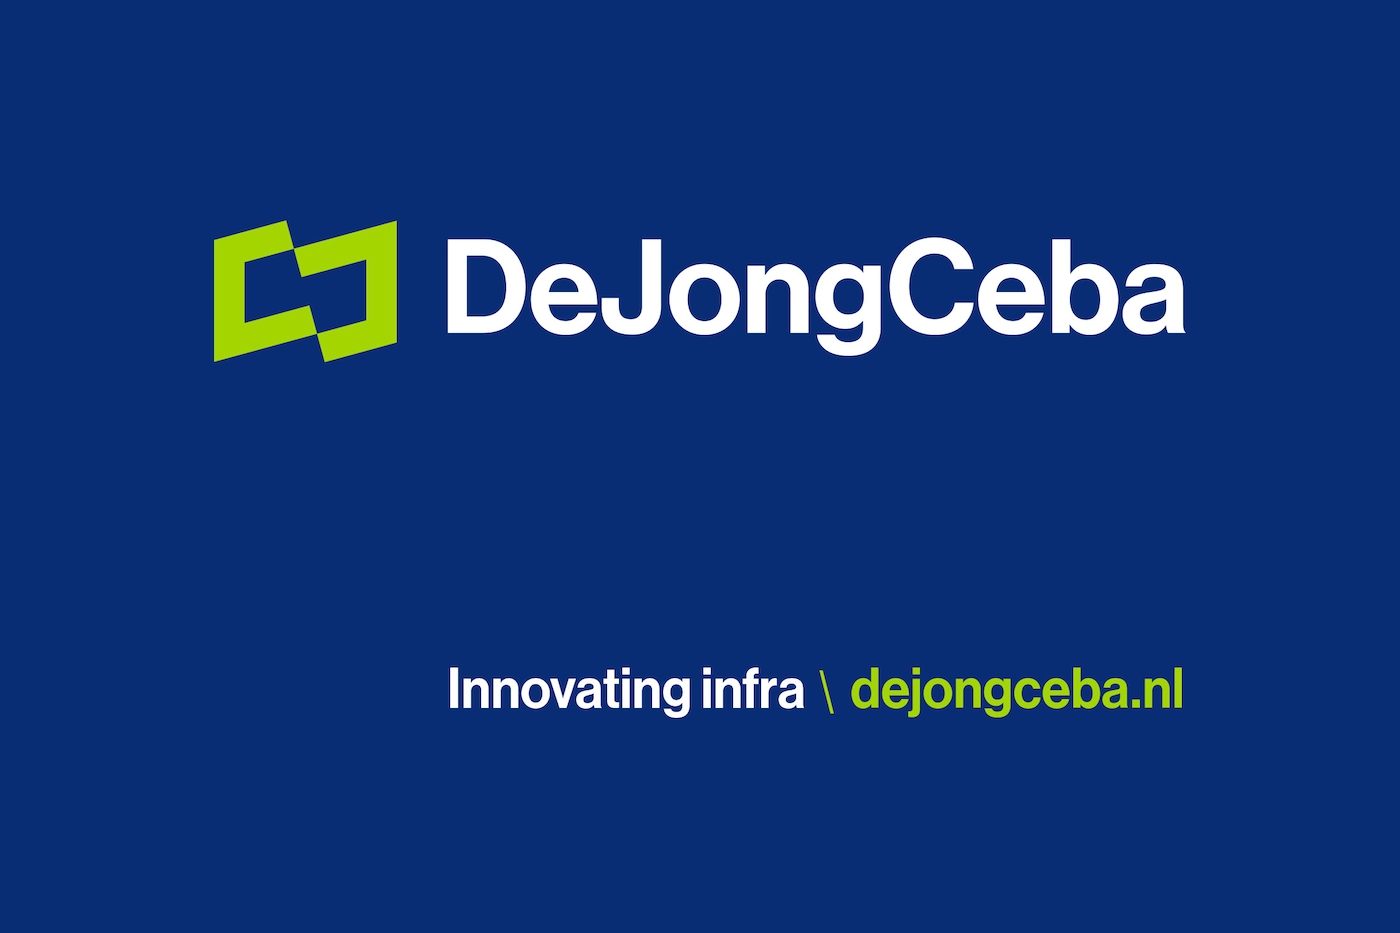 DeJongCeba, innovating infra